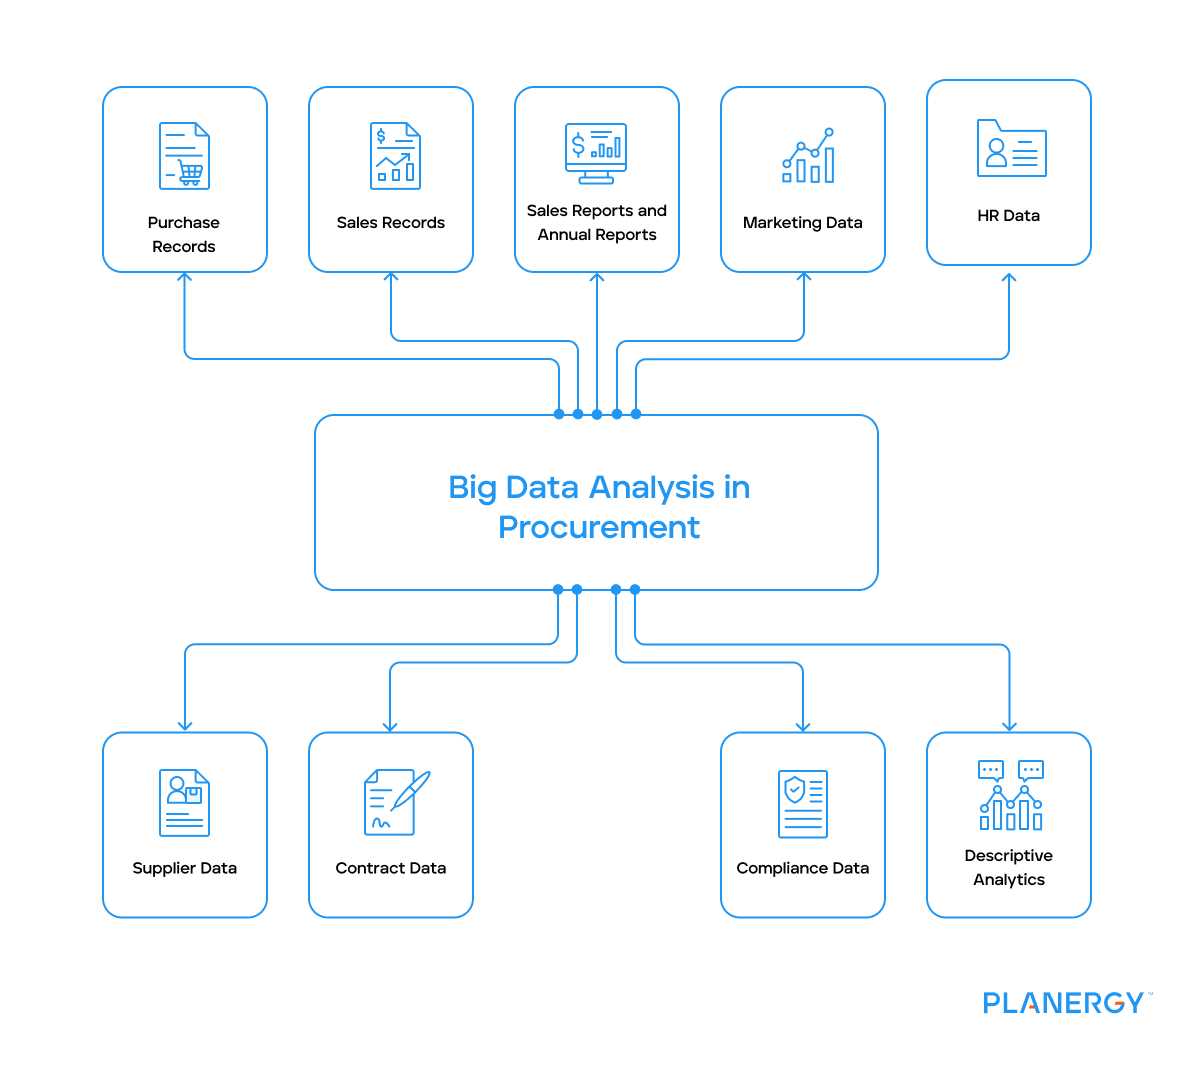 Big data analysis in procurement